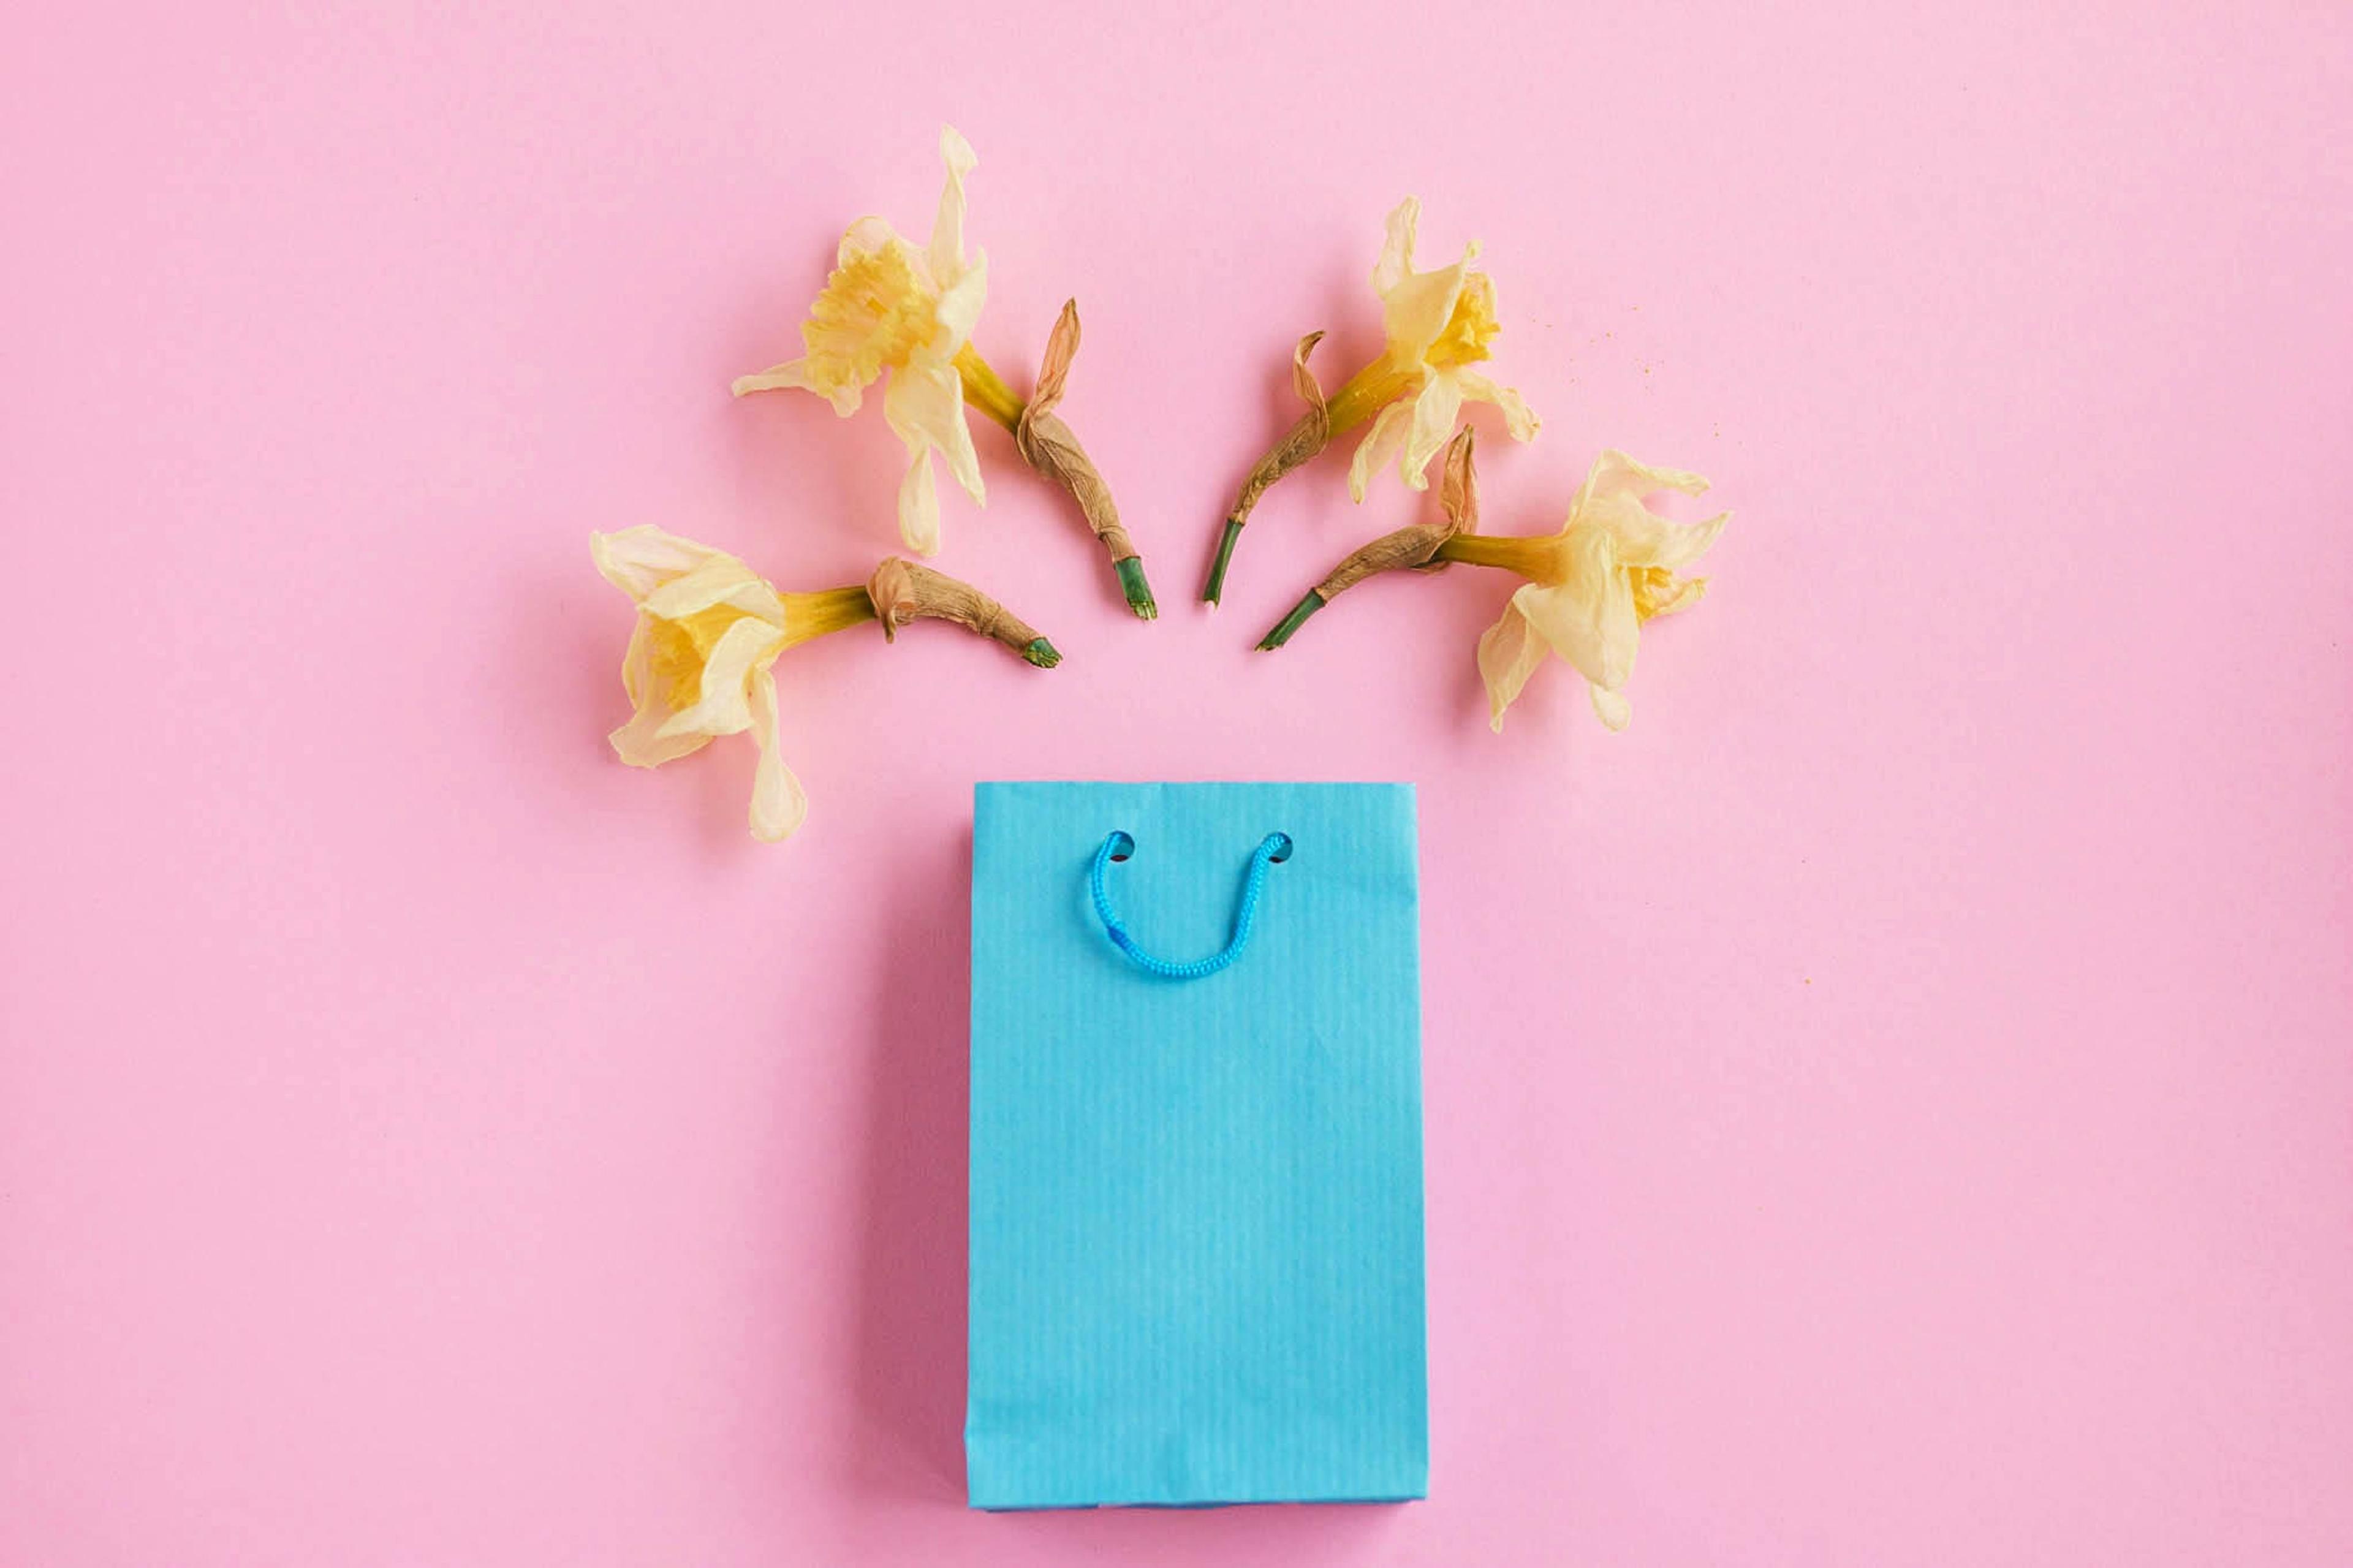 A blue gift bag